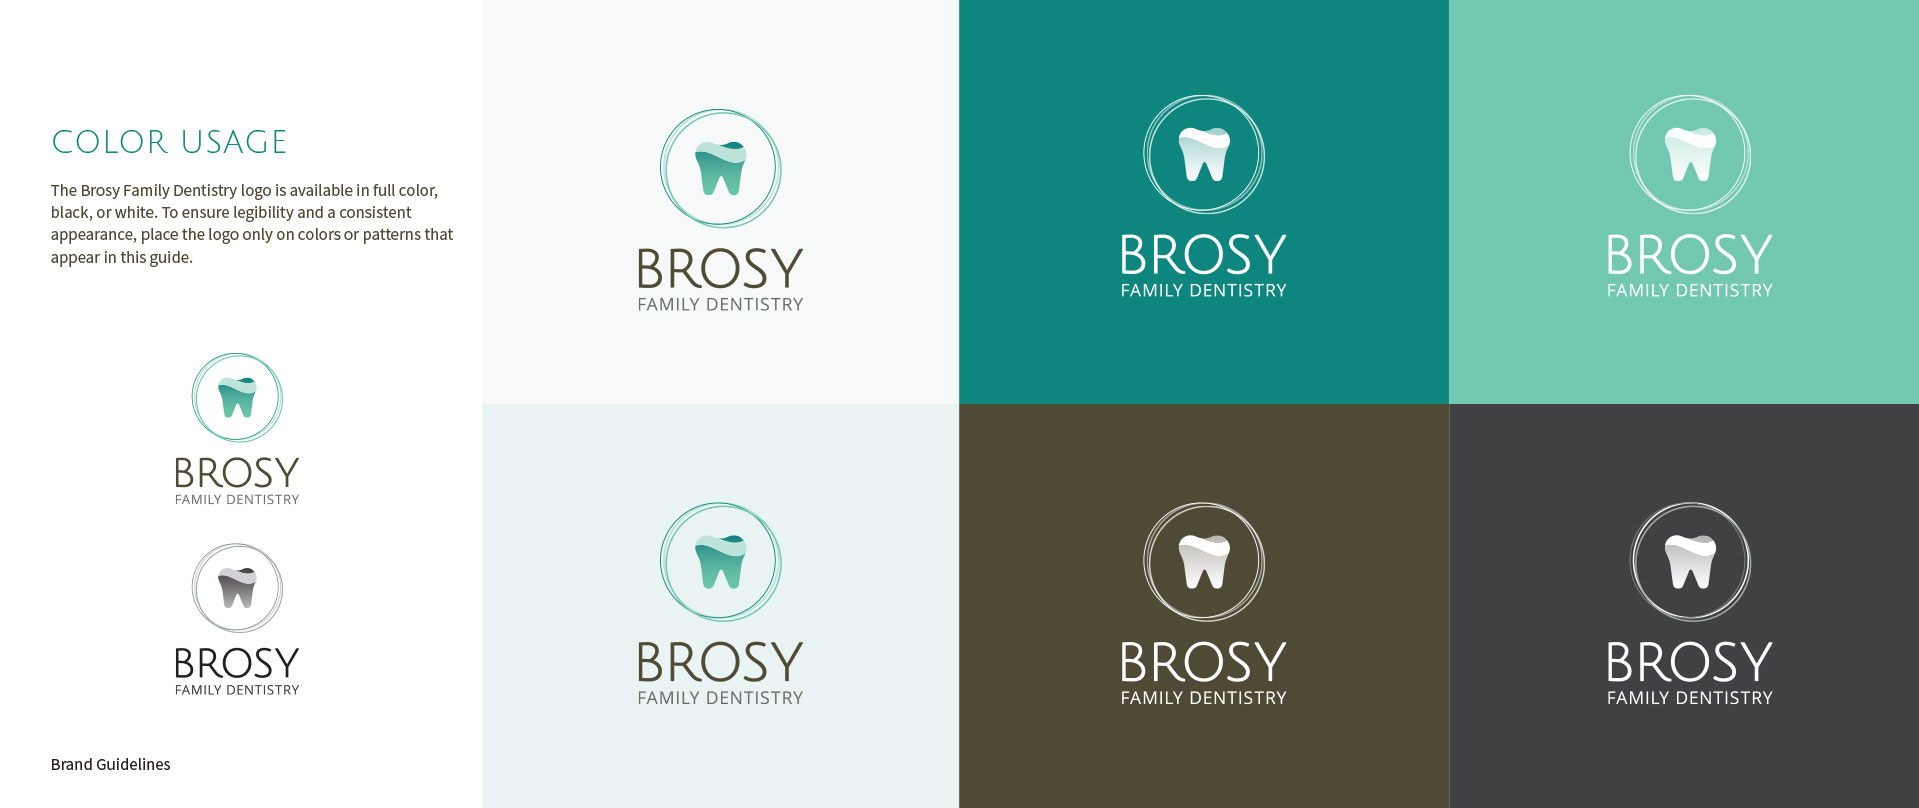 Brosy Brand Guidelines - logo